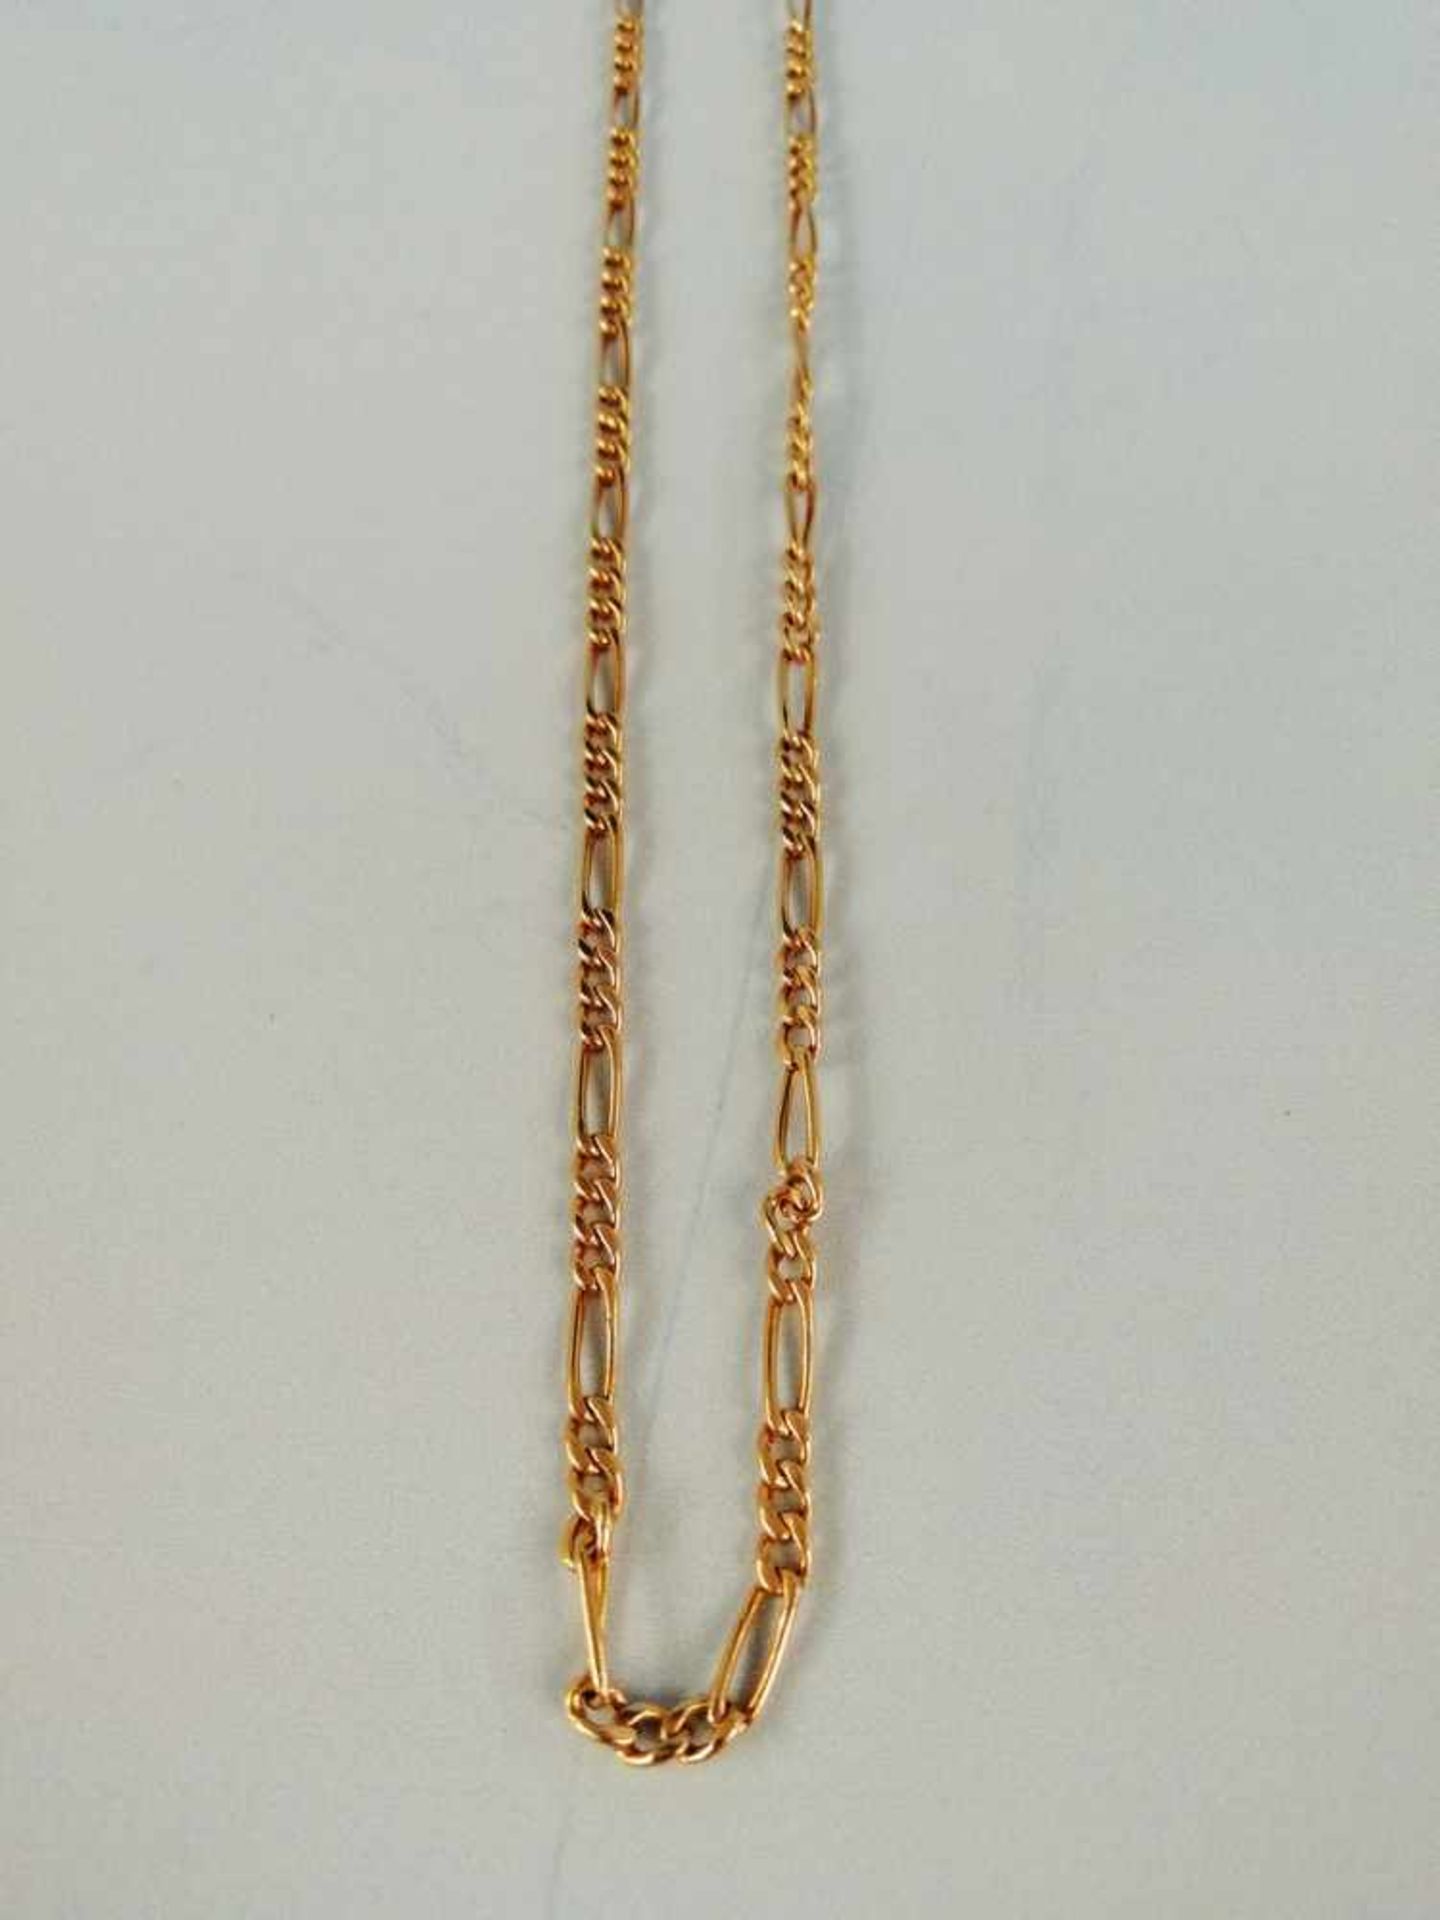 Figaro-HalsketteGold 585, Länge 55cm, 5g;